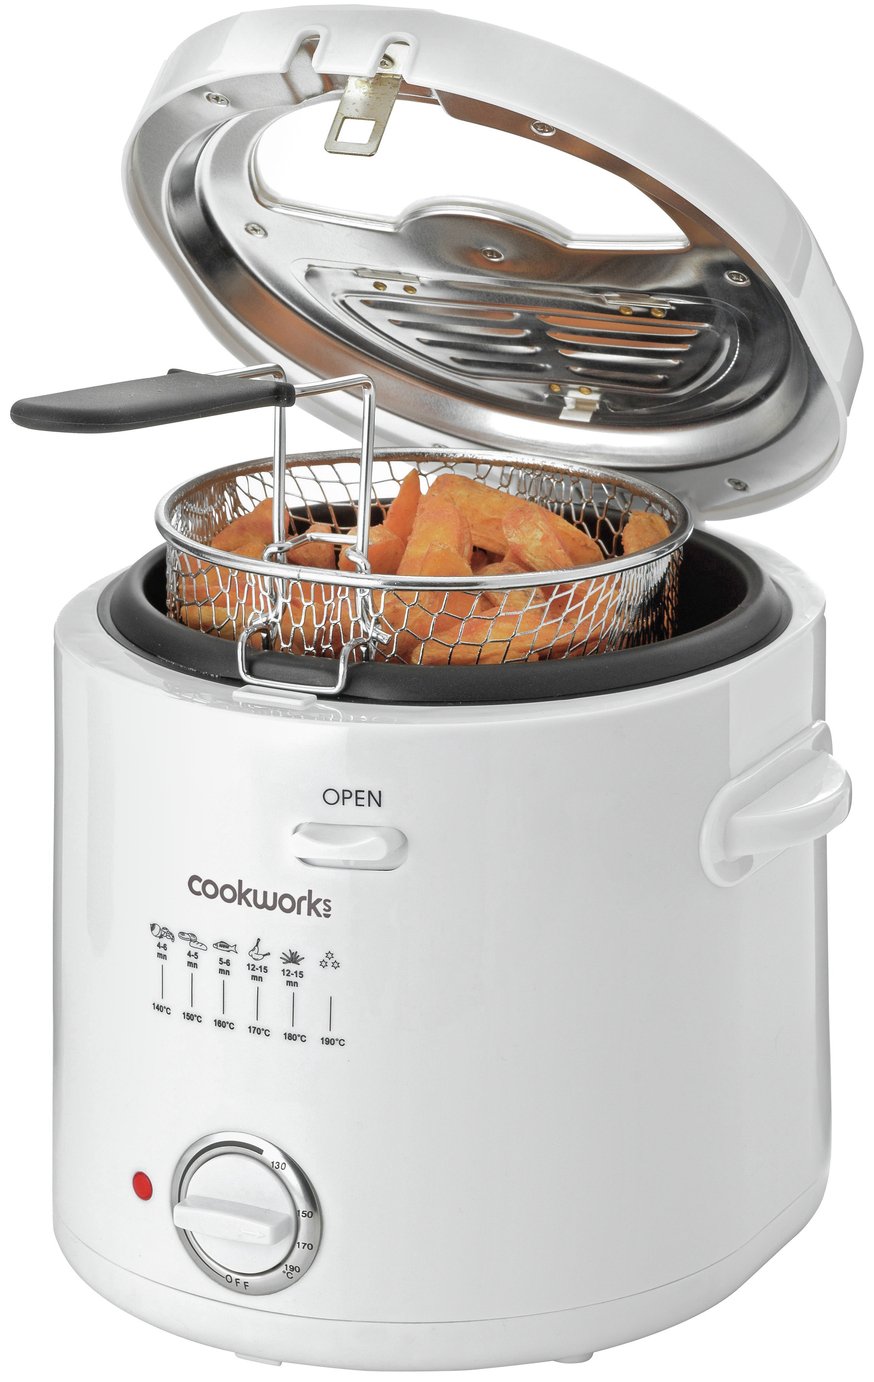 Cookworks 1.5L Deep Fat Fryer review